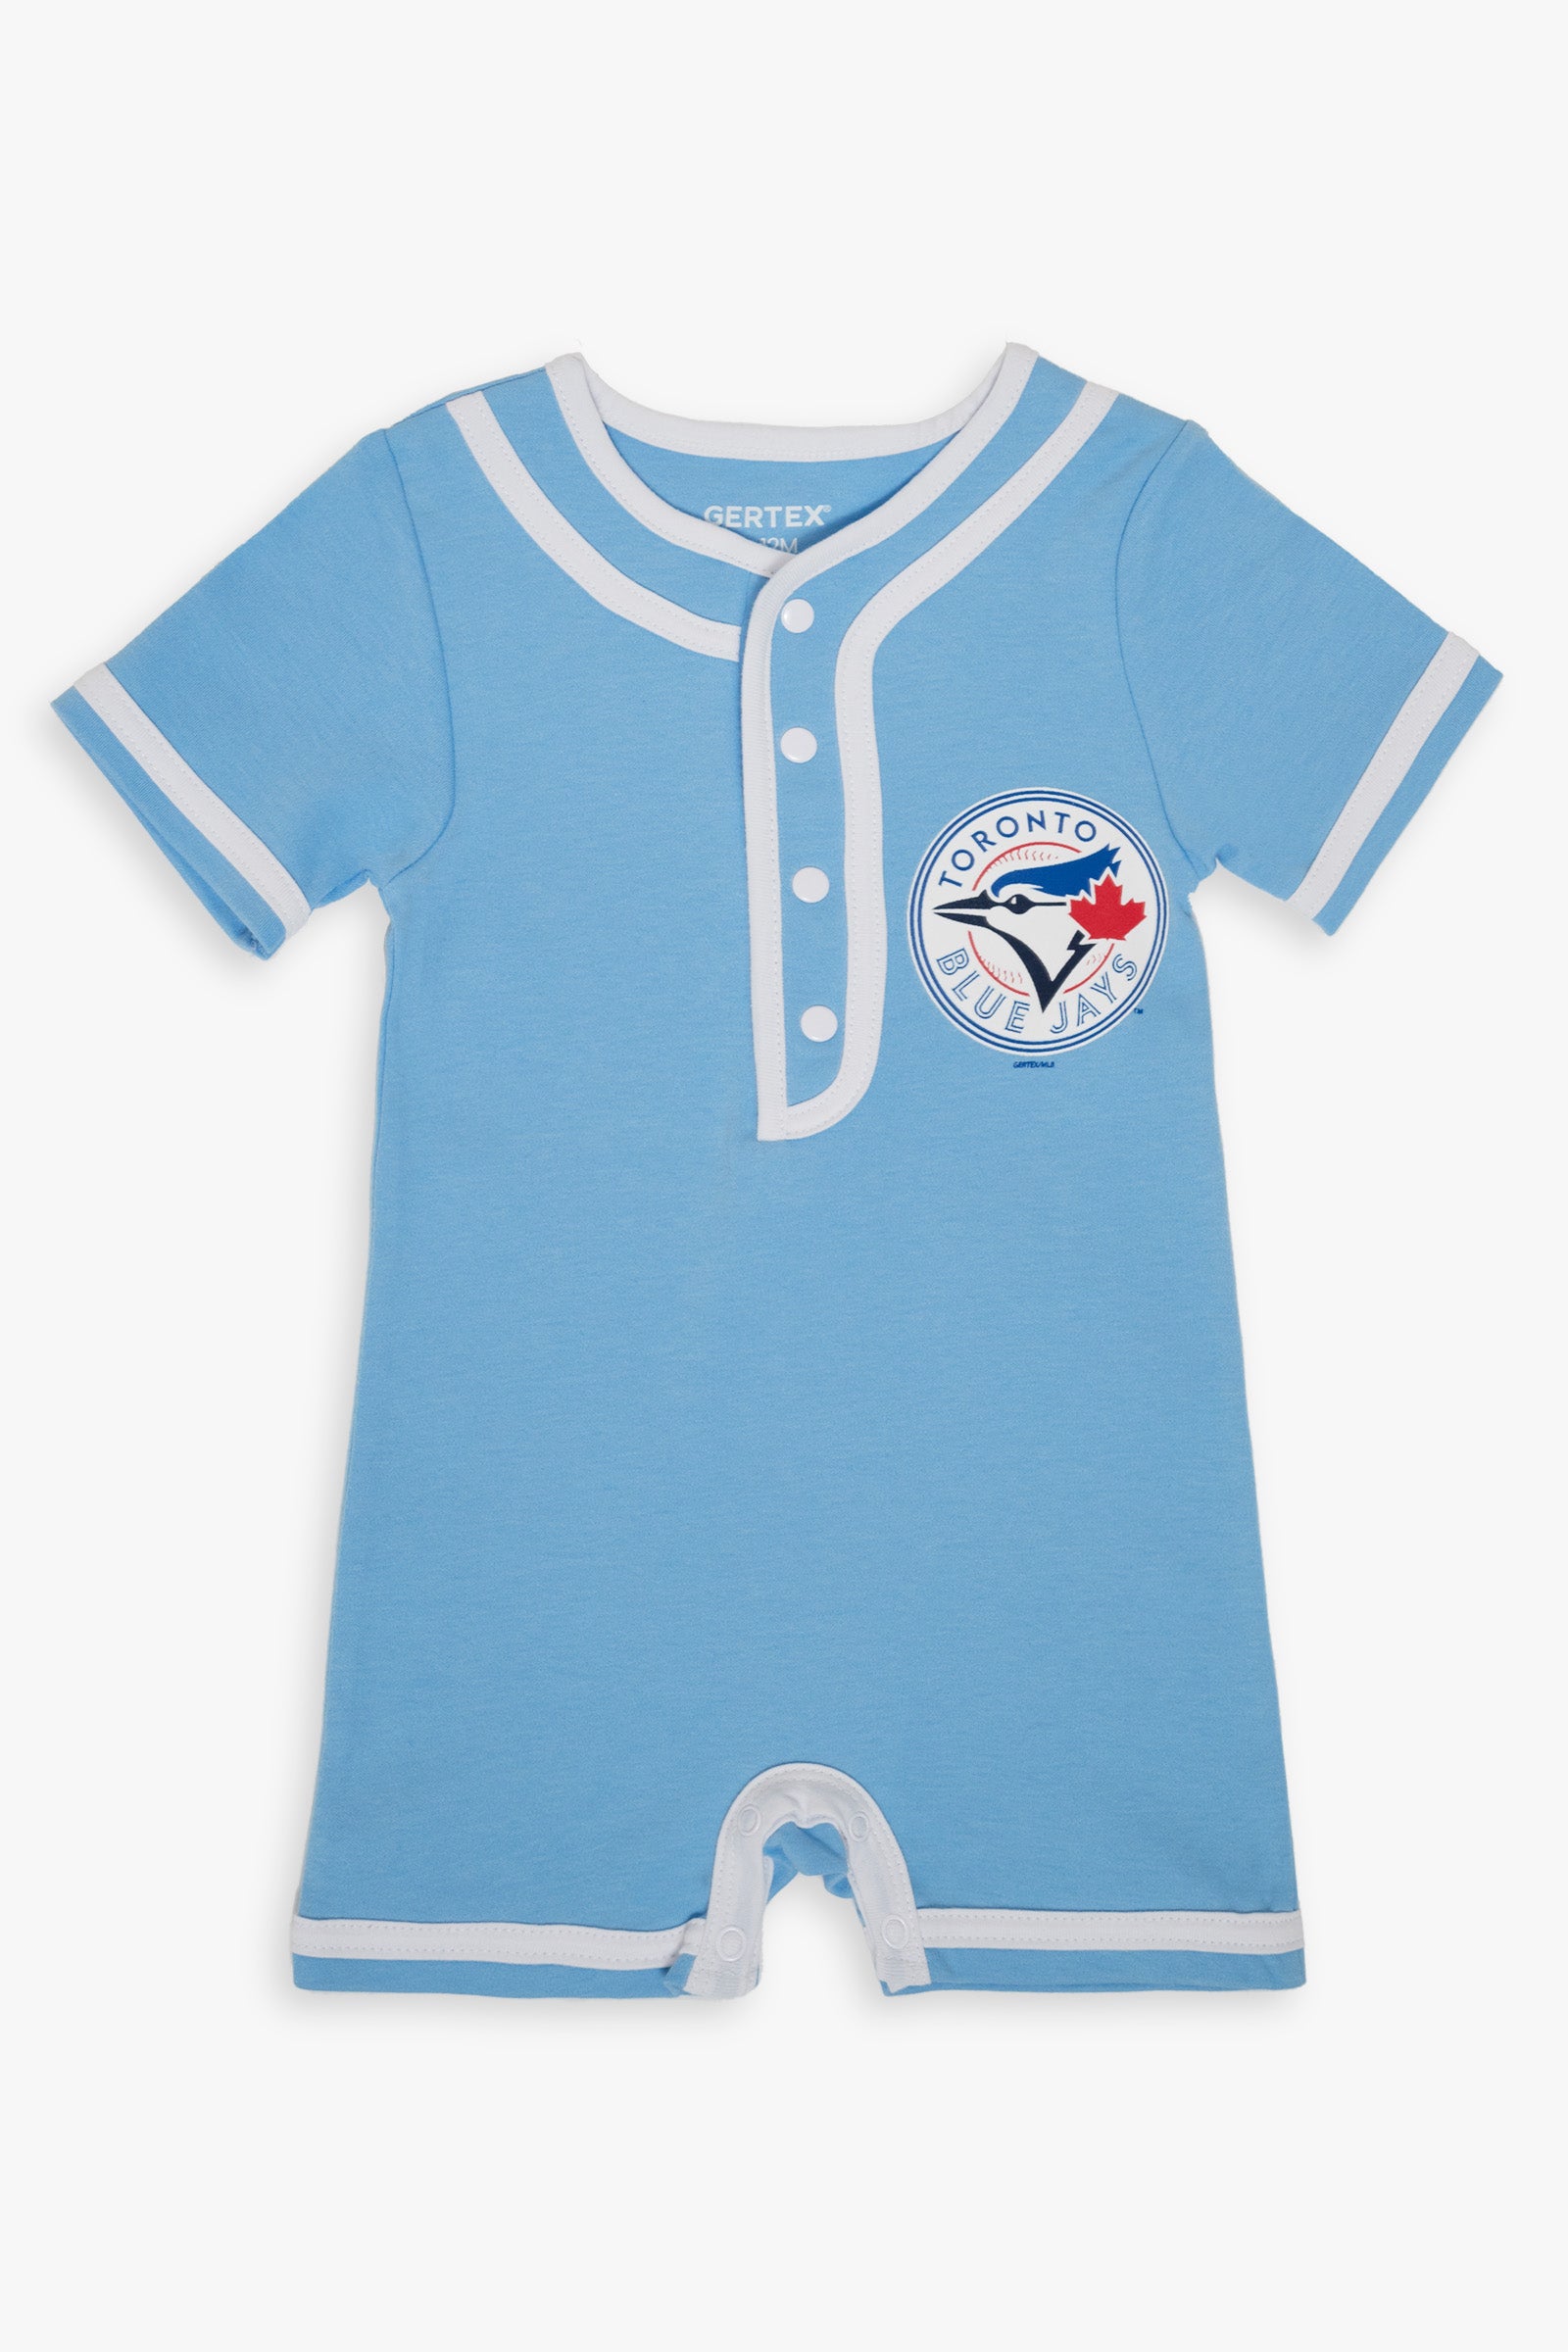 Baby Toronto Blue Jays Gear, Toddler, Blue Jays Newborn Baseball Clothing, Infant  Blue Jays Apparel